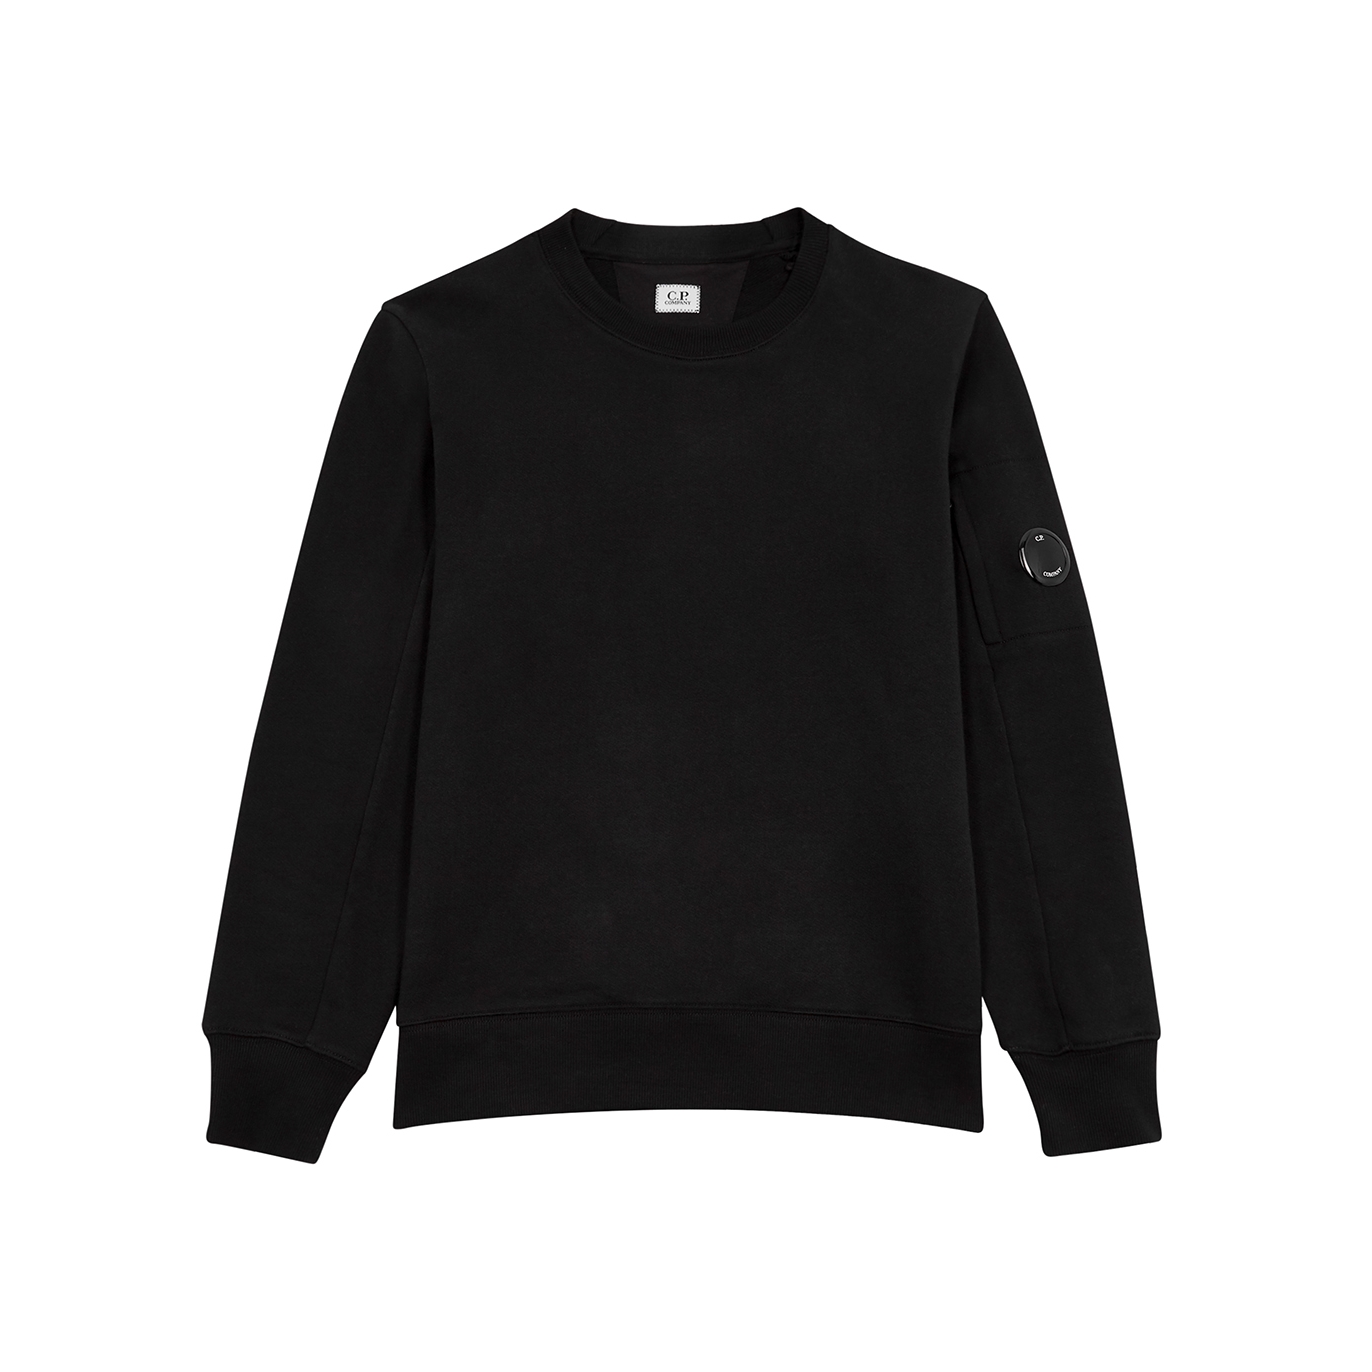 C.P. Company Diagonal Raised Cotton Sweatshirt - Black - XL